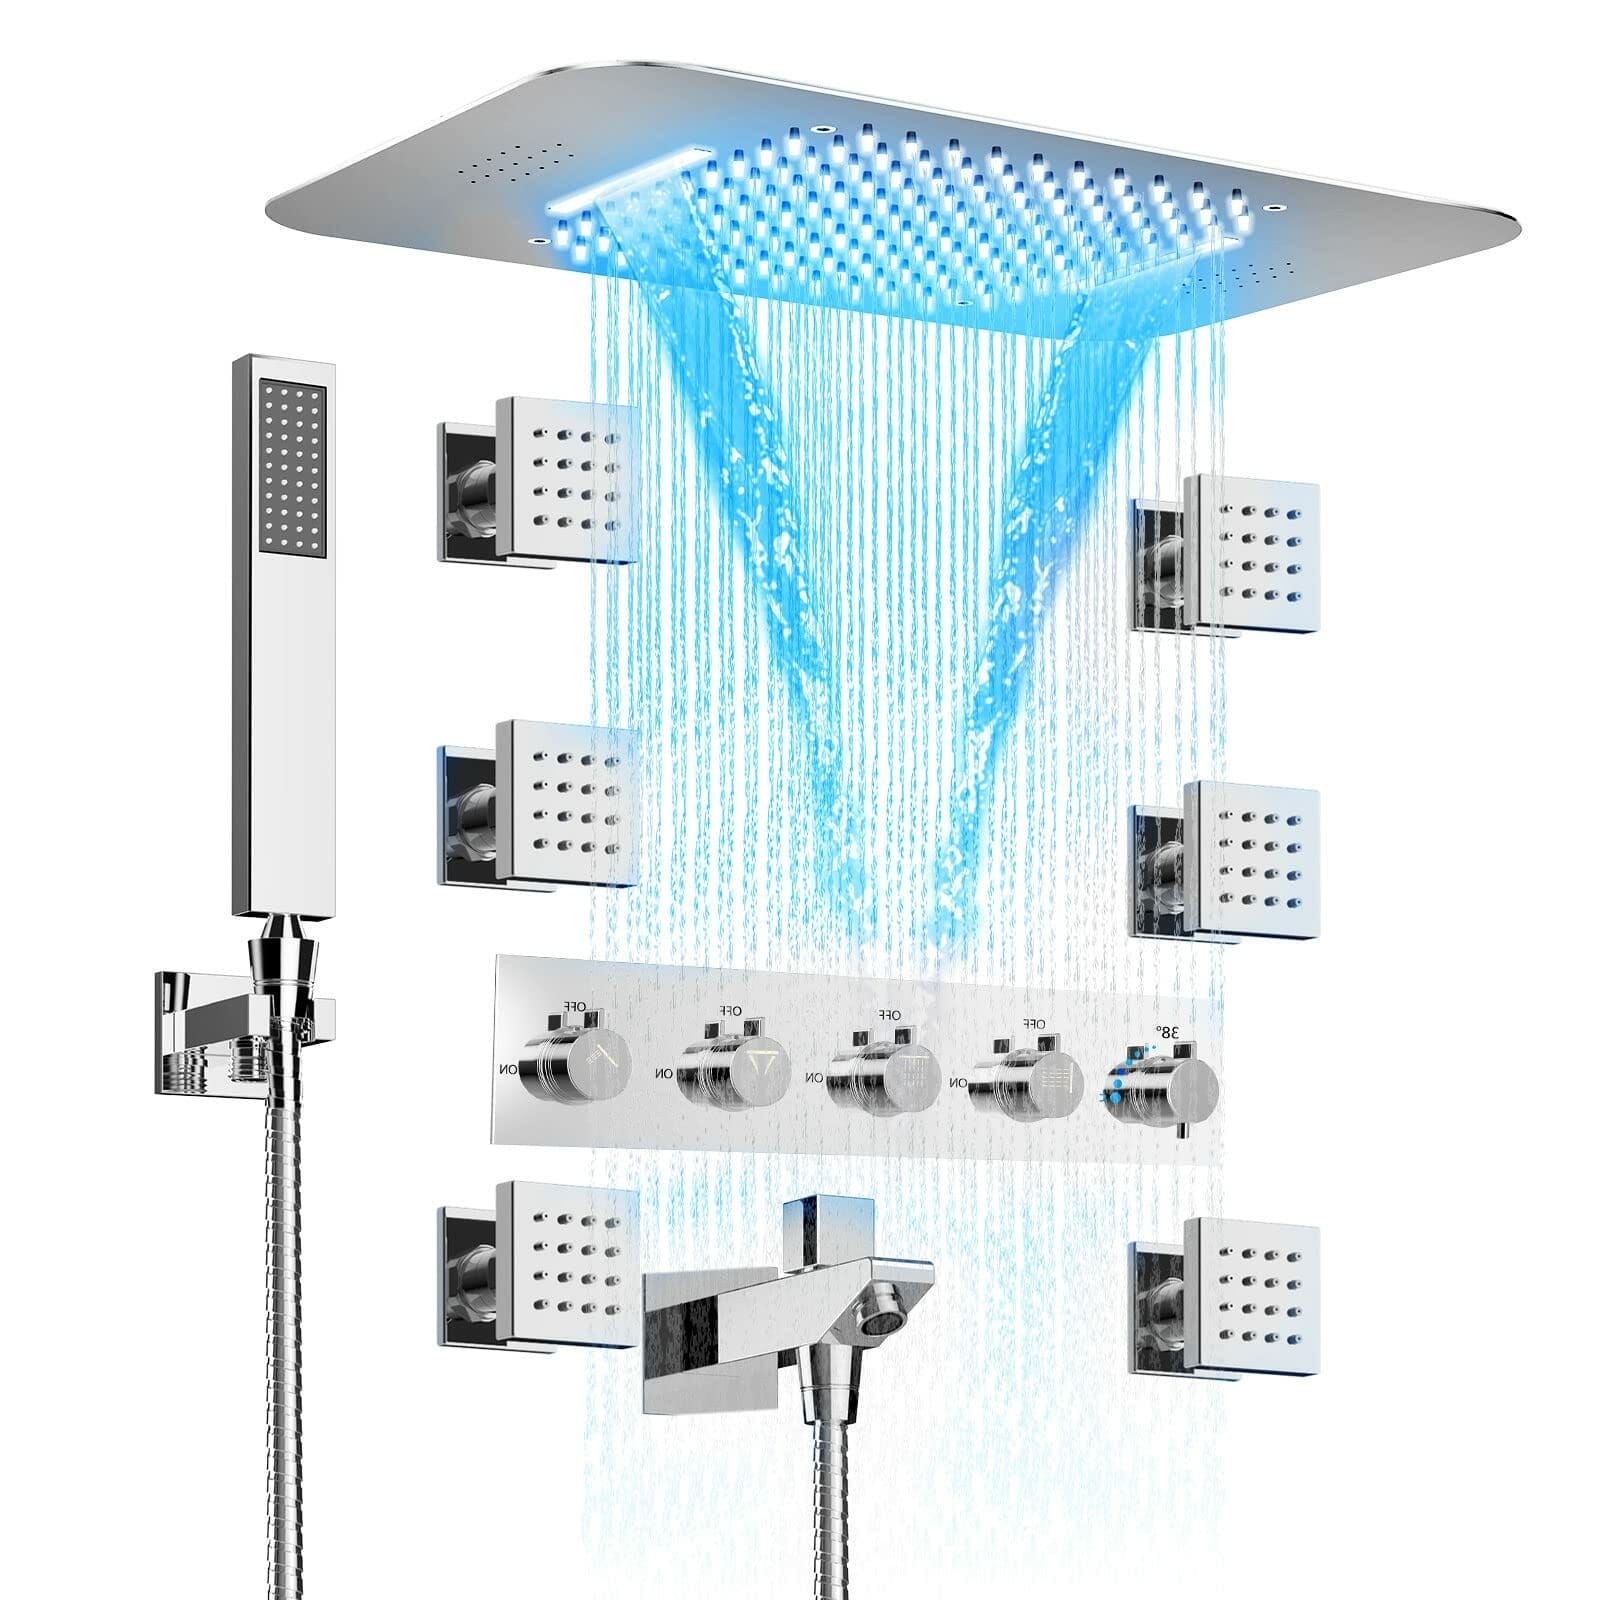 ILROOMH LED Rain Shower System